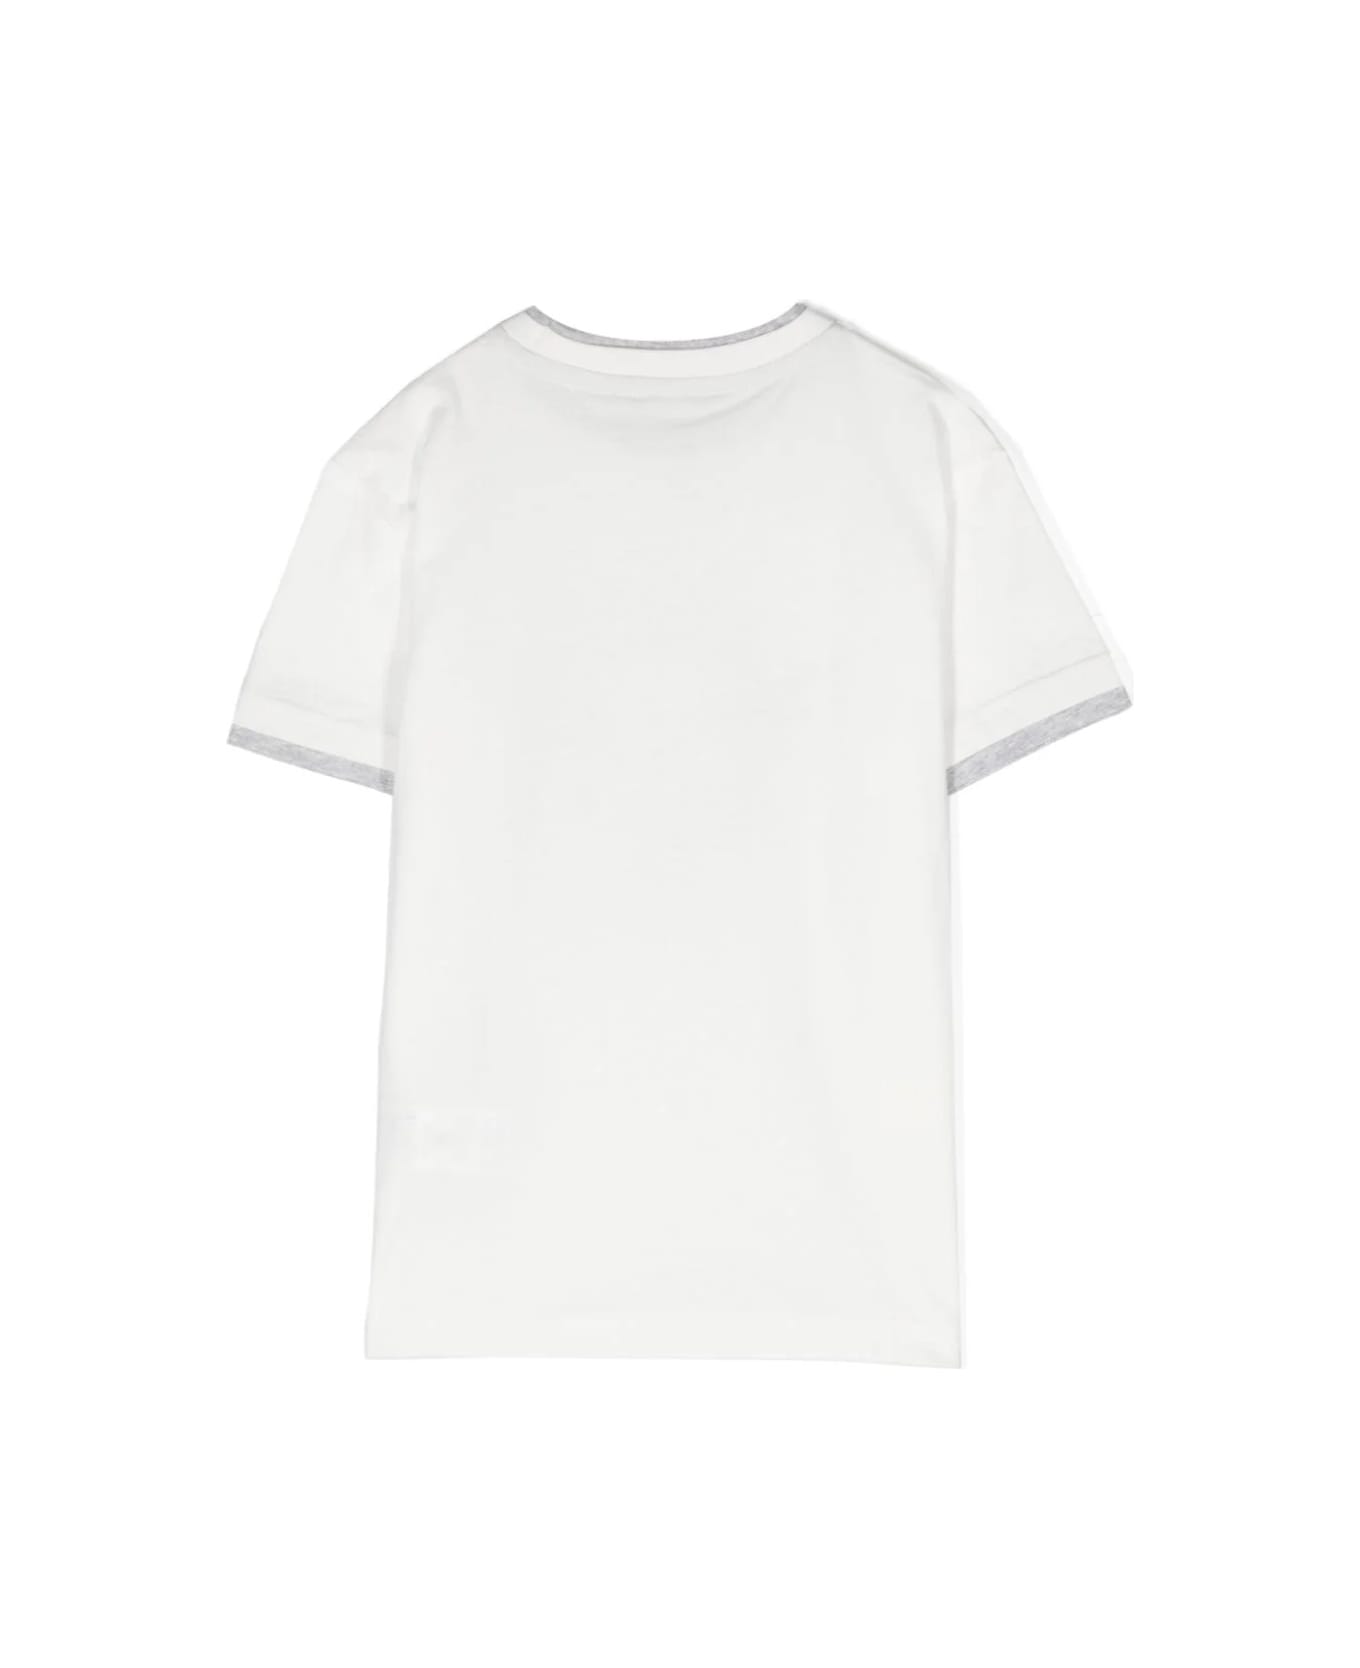 Eleventy White T-shirt With Graphic Print - White